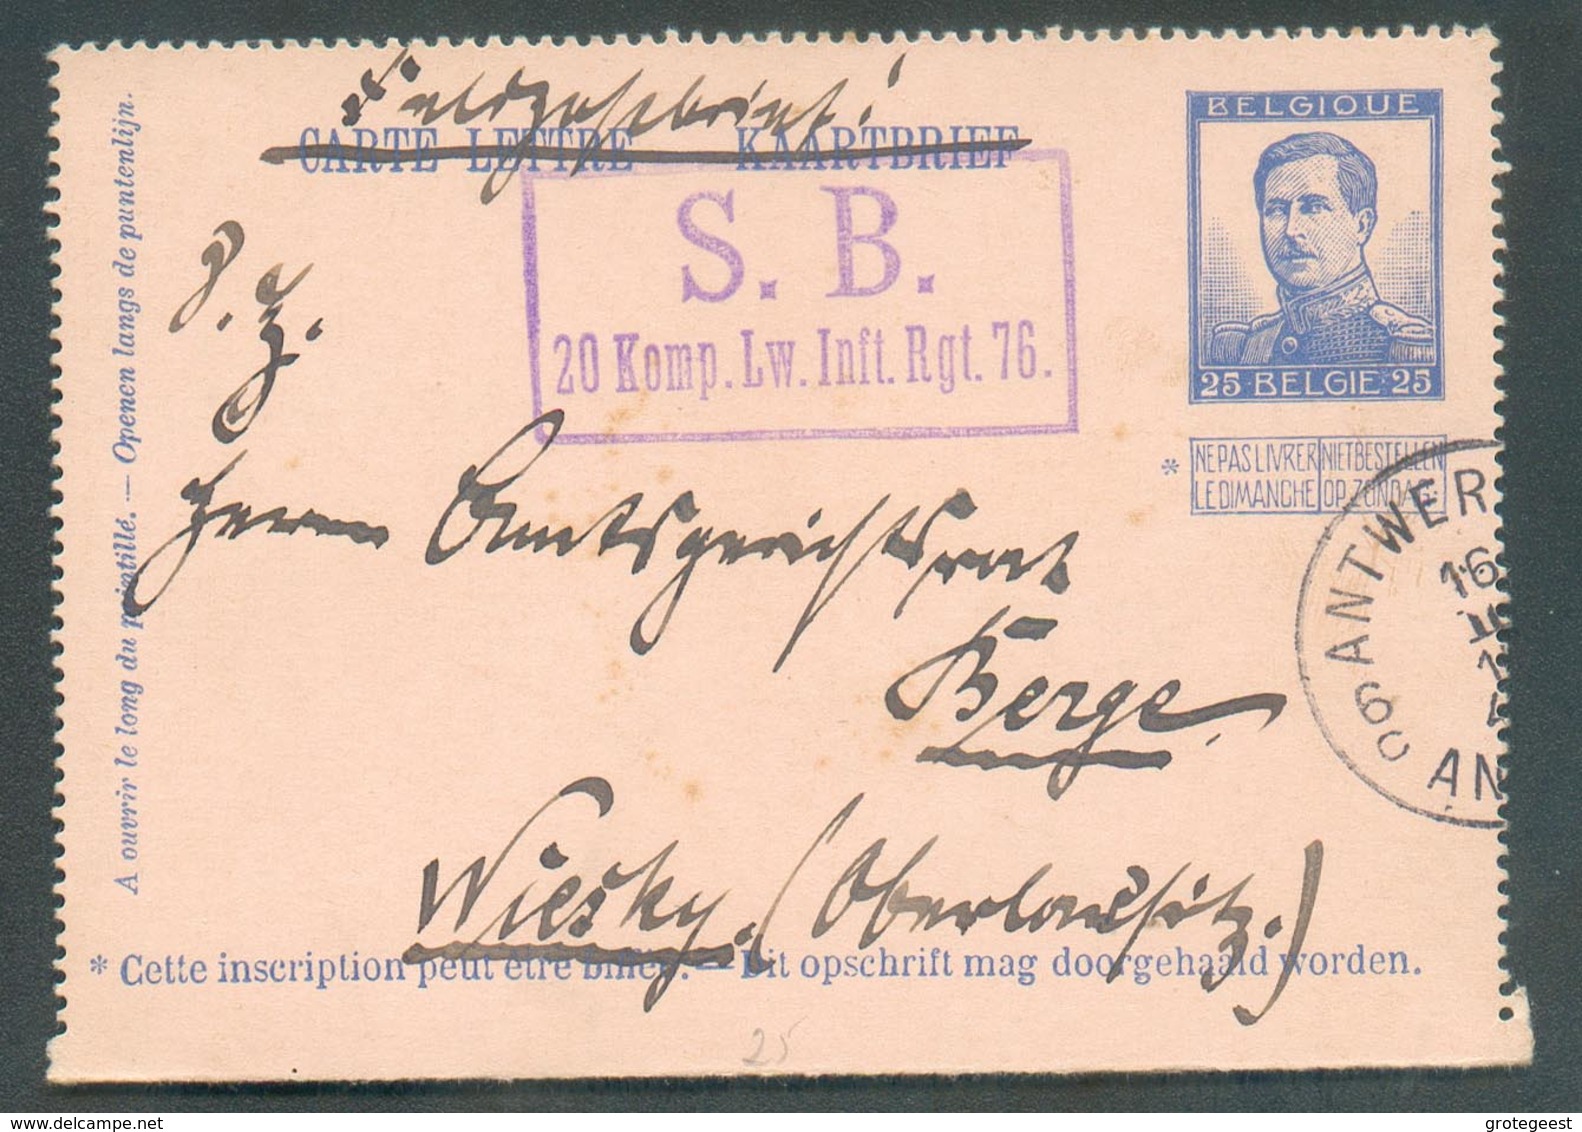 E.P. Carte-lettre 25c. Pellens Obl. Sc ANTWERPEN 6 Du 16-II-1915 En Feldpostbrief + Griffe Violette S.B. 20.Komp.Lw.Infl - Letter-Cards